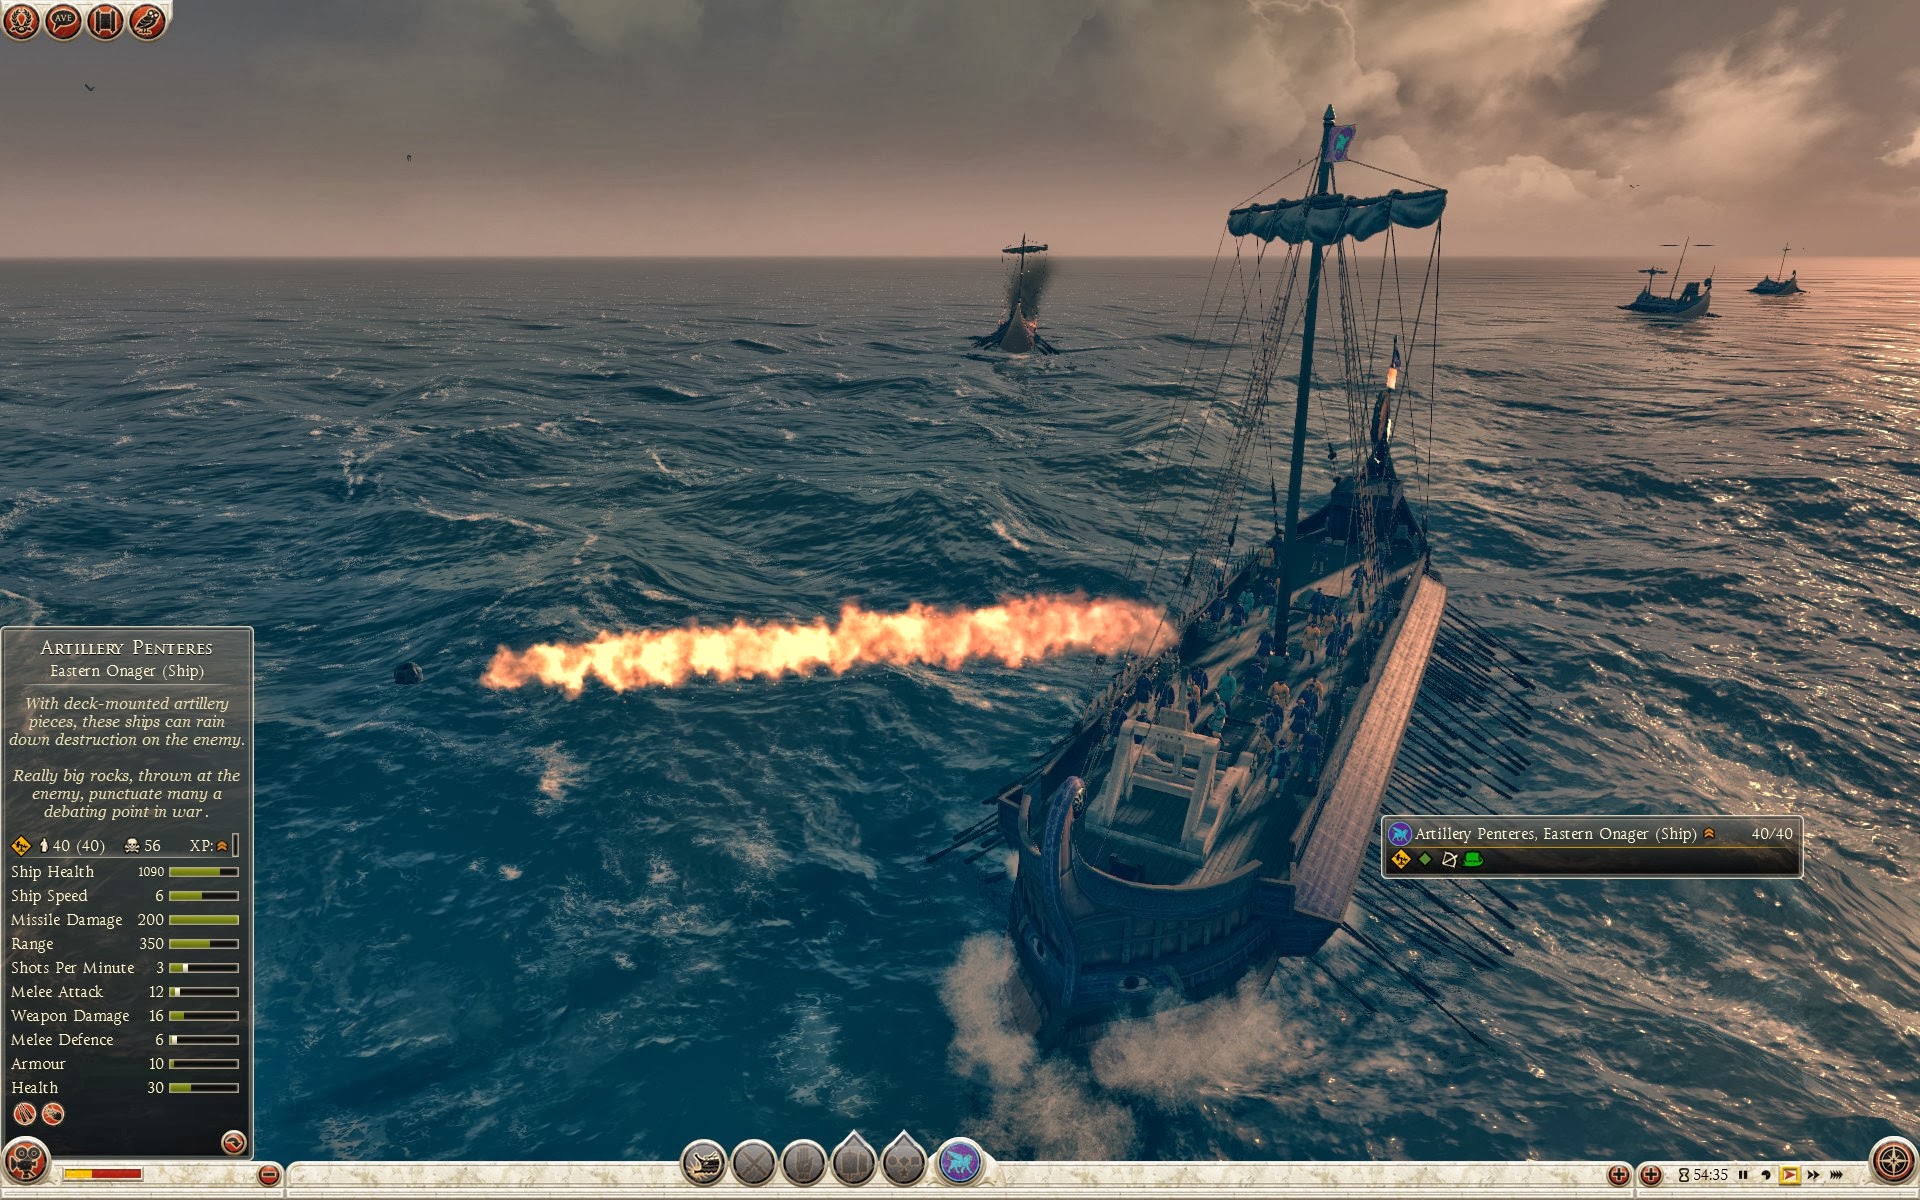 Penteres de artillería - Onagro oriental (barco)